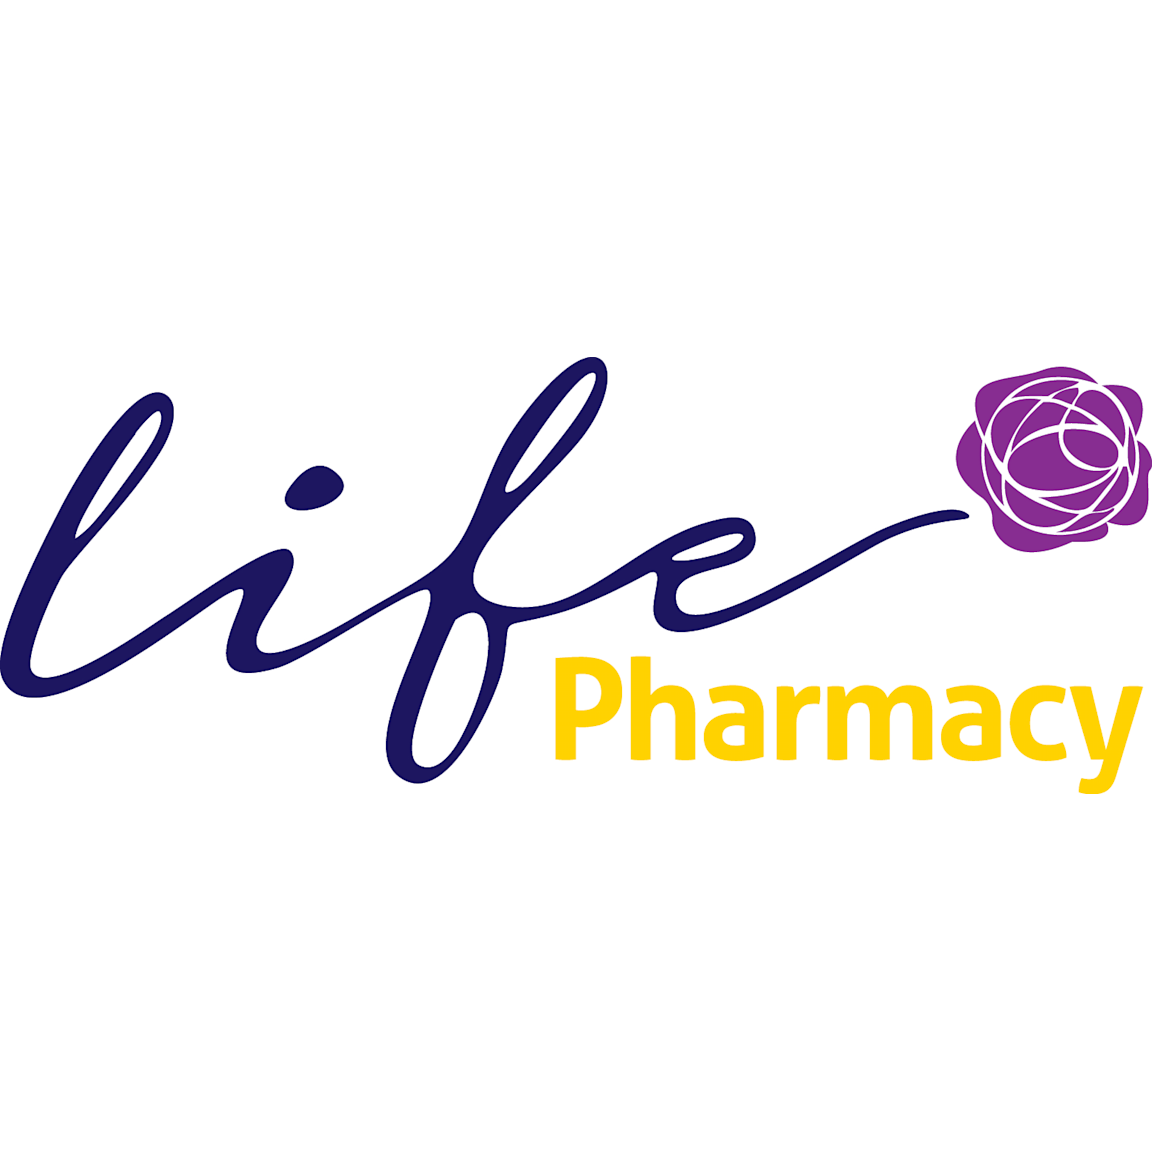 FREE Shipping at Life Pharmacy